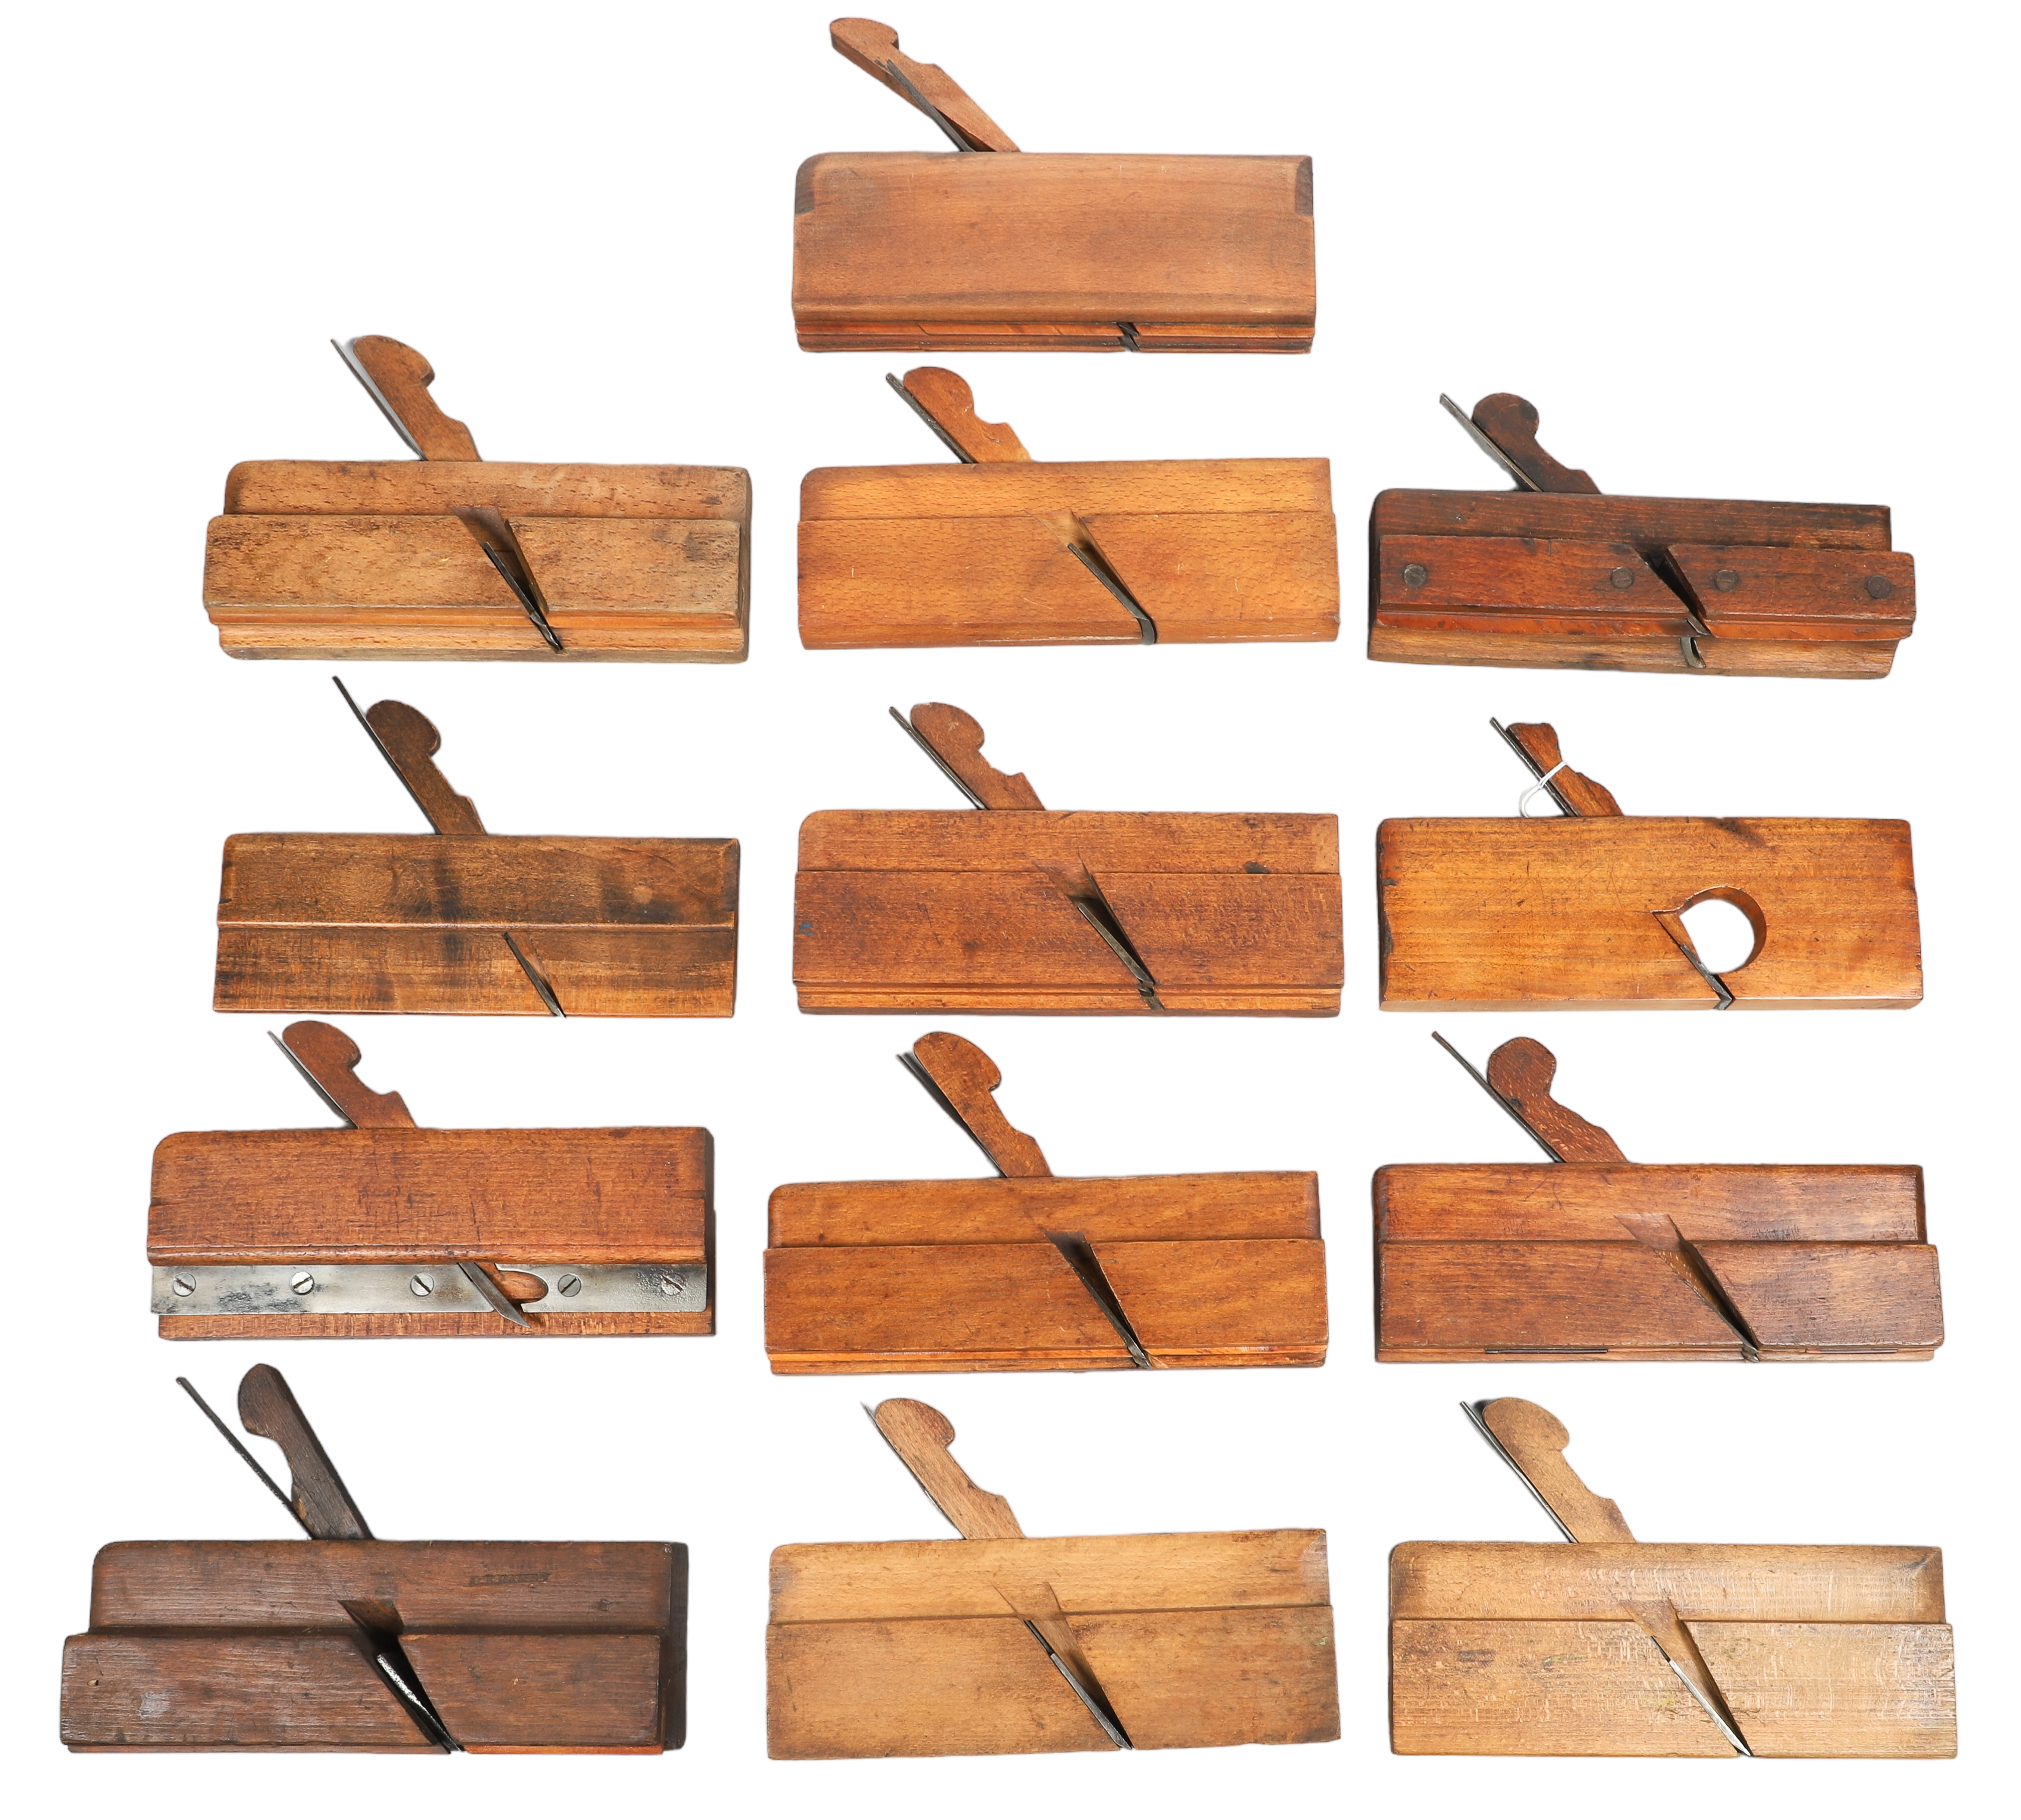  13 Woodworking molding planes 2e165e